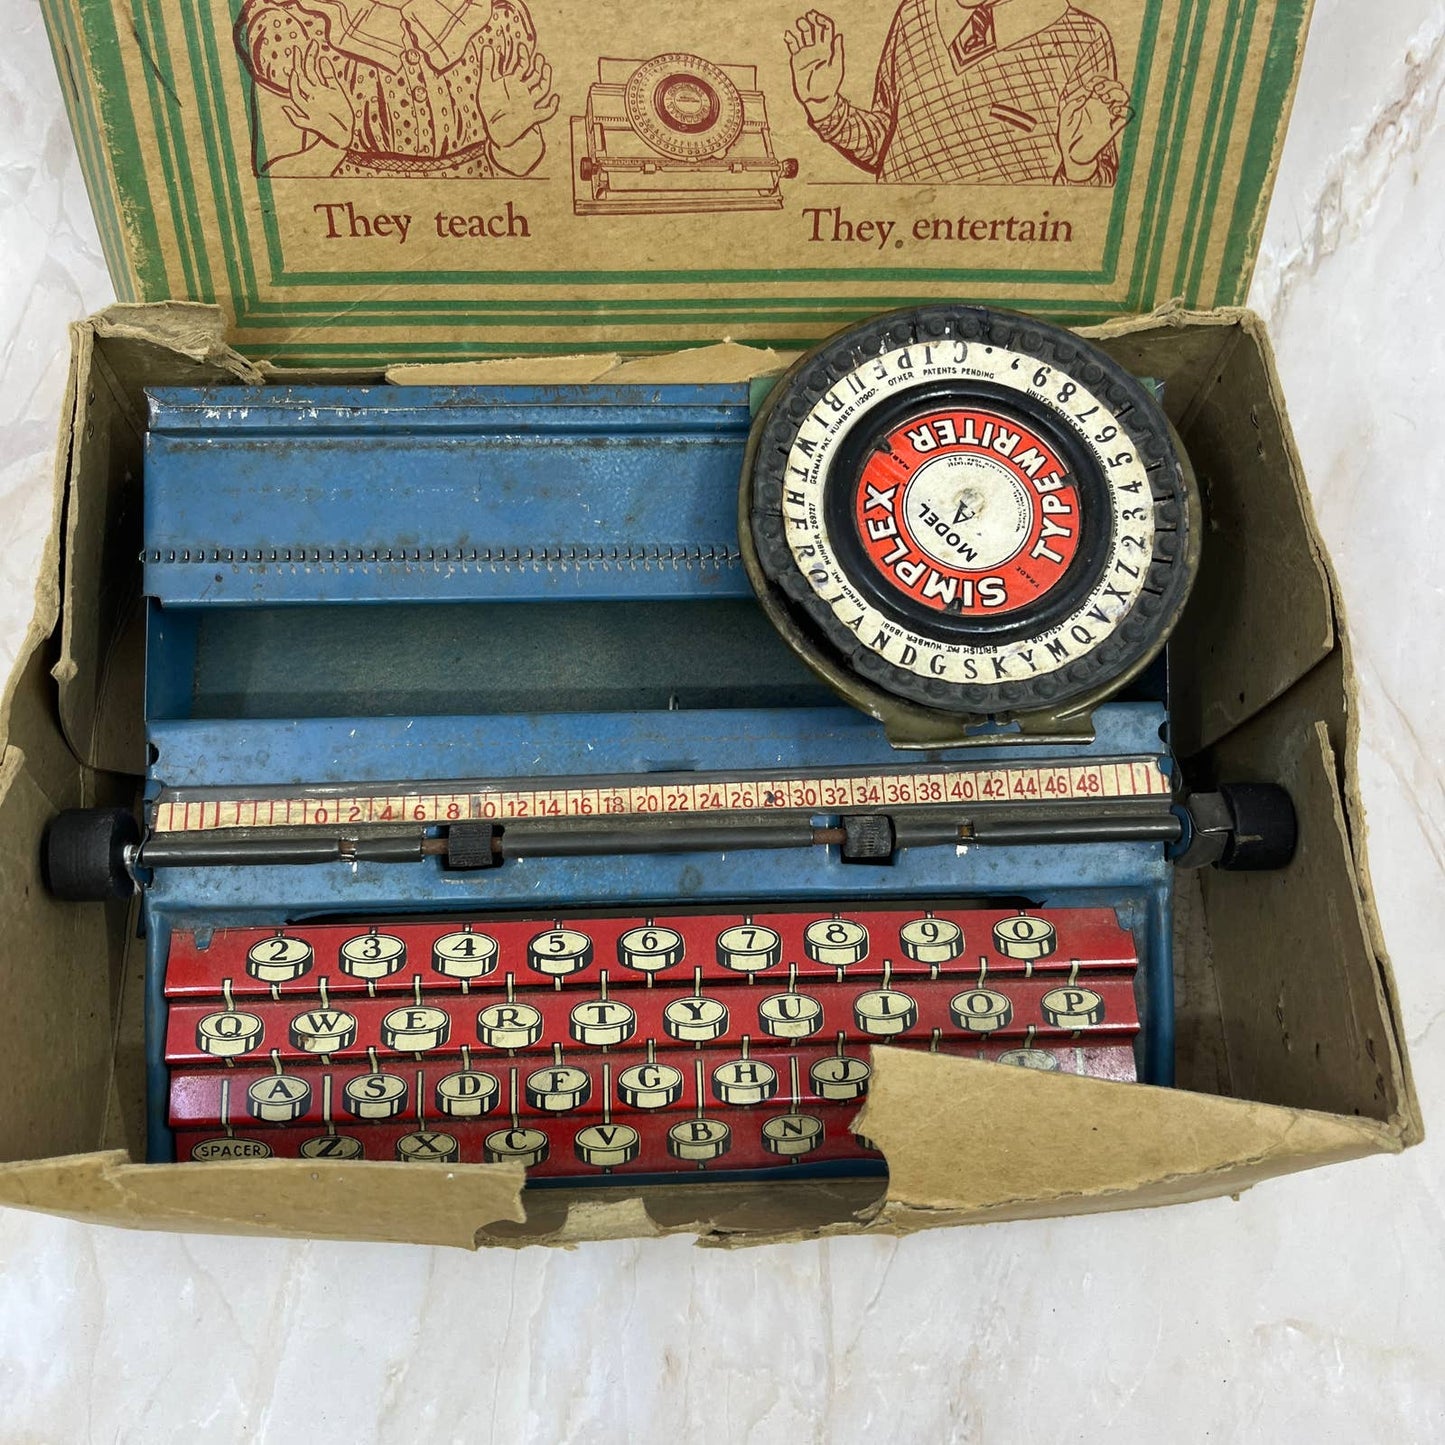 Vintage Antique Tin Litho Toy Simplex Model A Typewriter in Original Box TK2